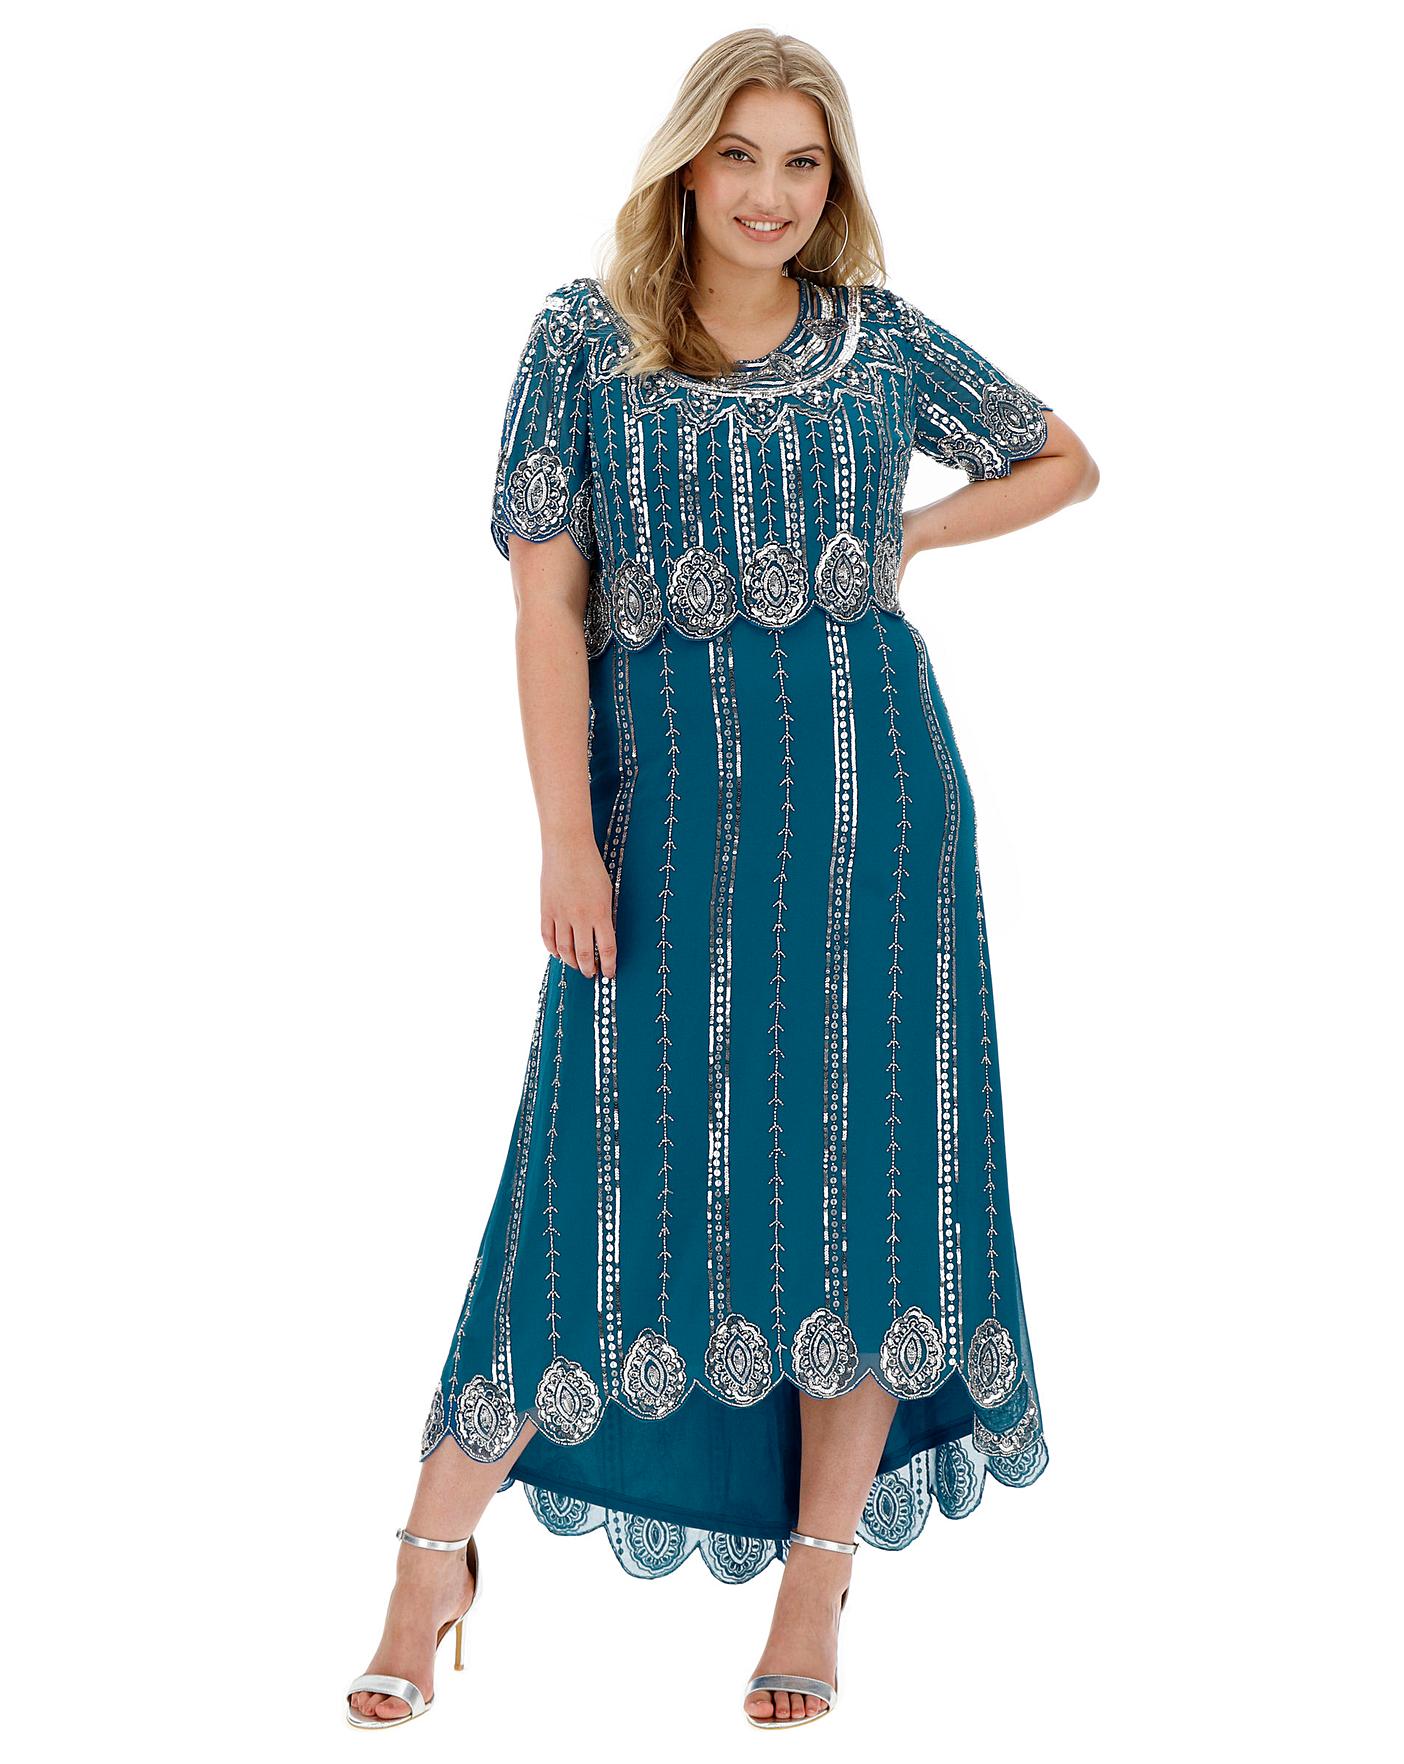 Joanna Hope Beaded Layer Dress | Simply Be